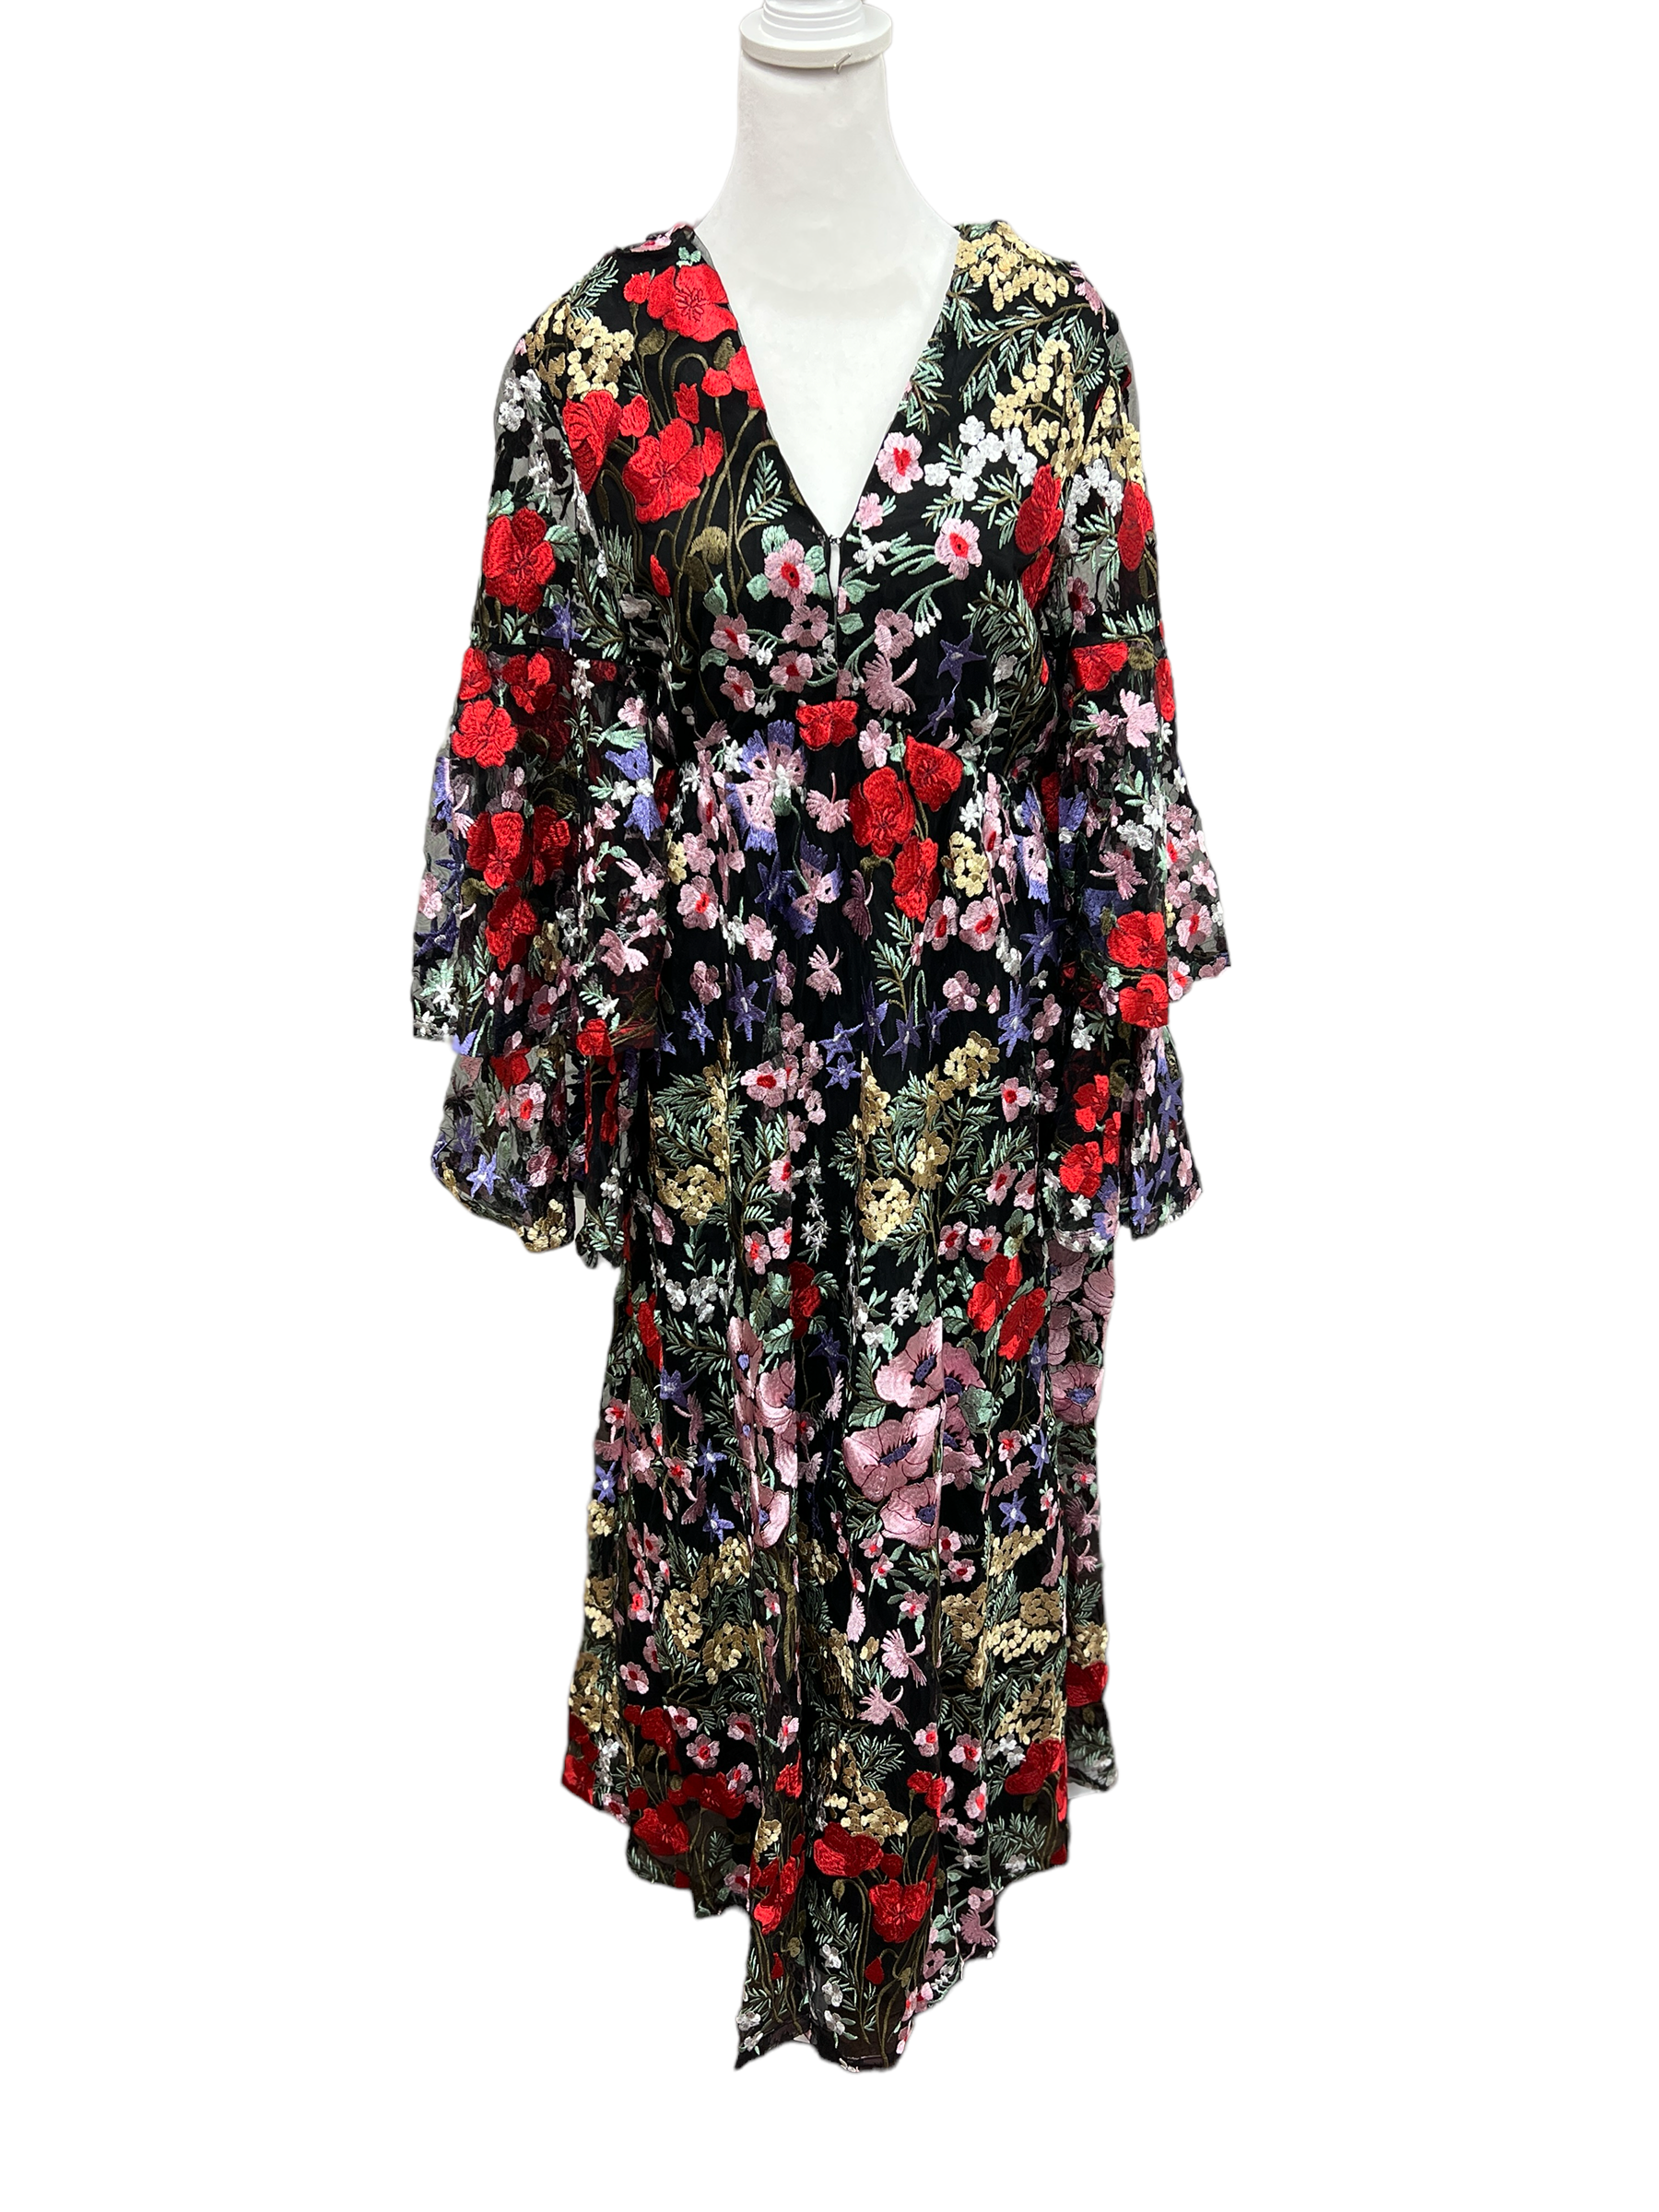 Colette Gardens Dress-310 Dresses-Simply Stylish Boutique-Simply Stylish Boutique | Women’s & Kid’s Fashion | Paducah, KY